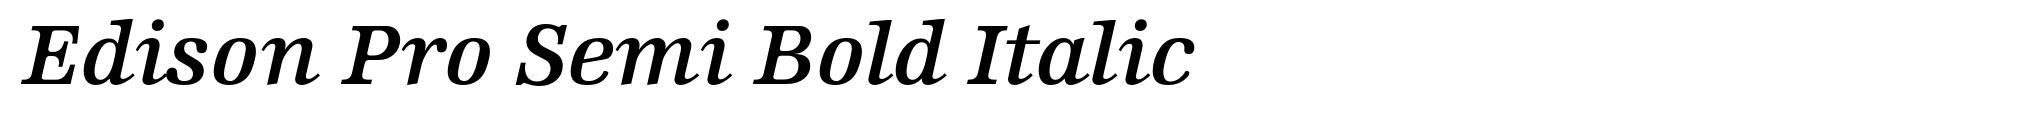 Edison Pro Semi Bold Italic image